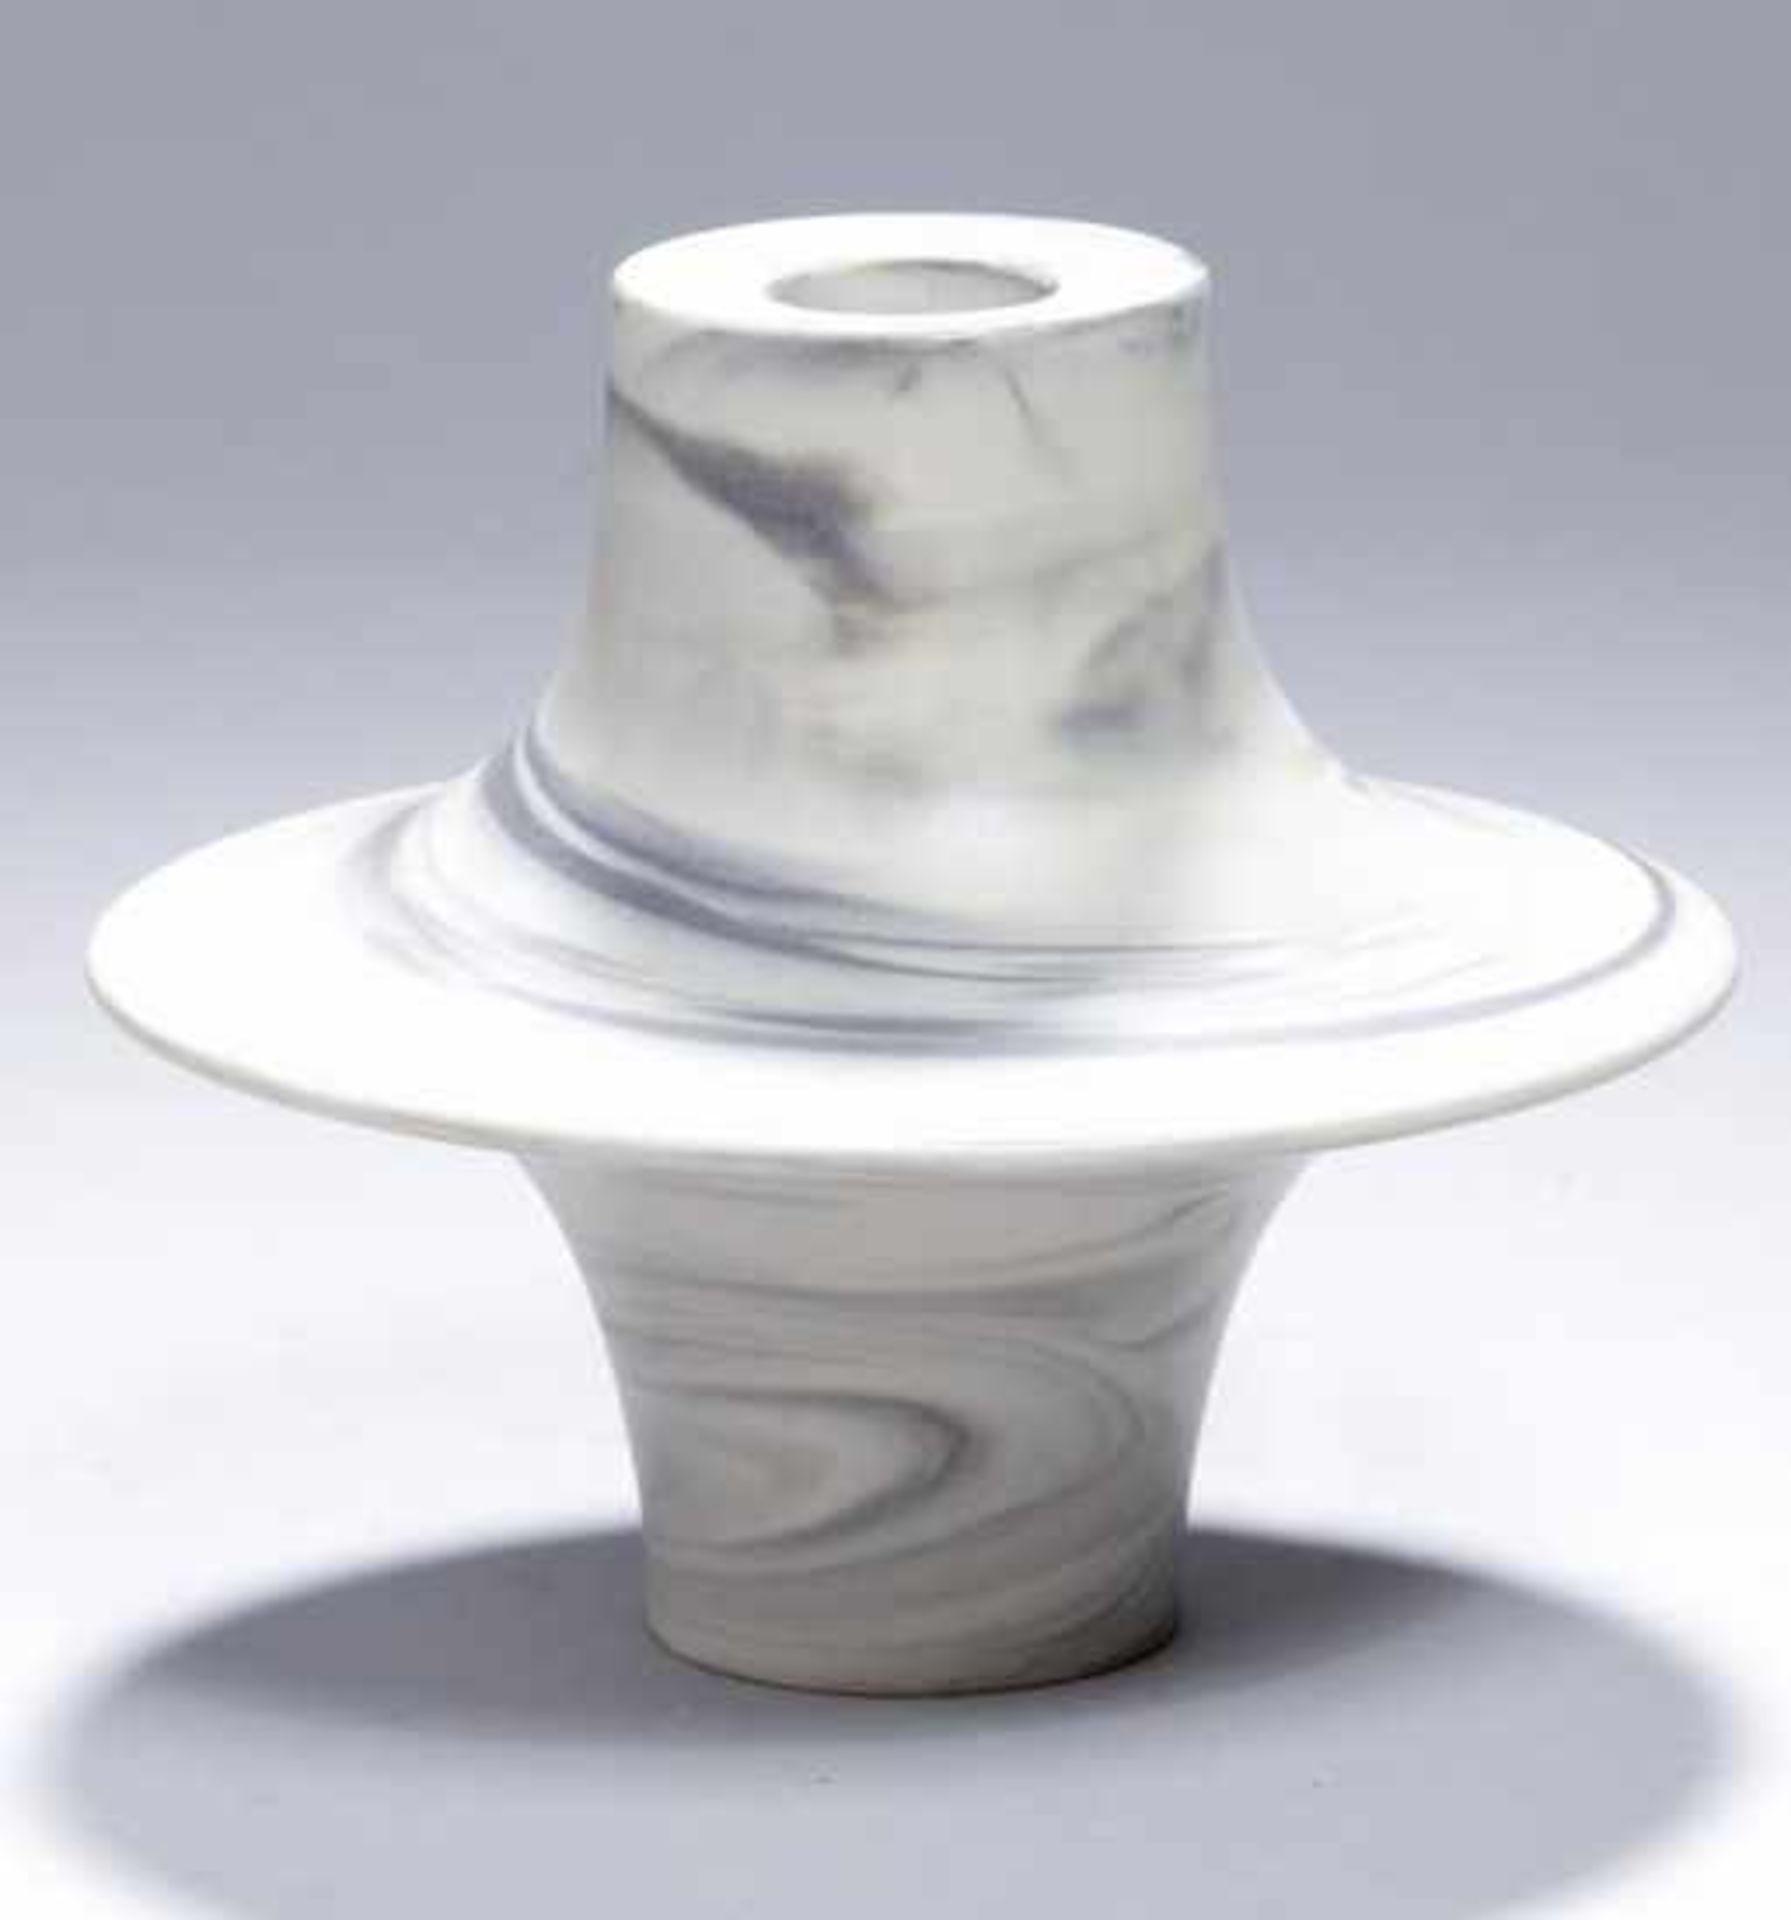 Keramik-Tafelleuchter, 1-flg., "Queensberry Marble", Rosenthal, Studio-Linie, 70er Jahre,heller